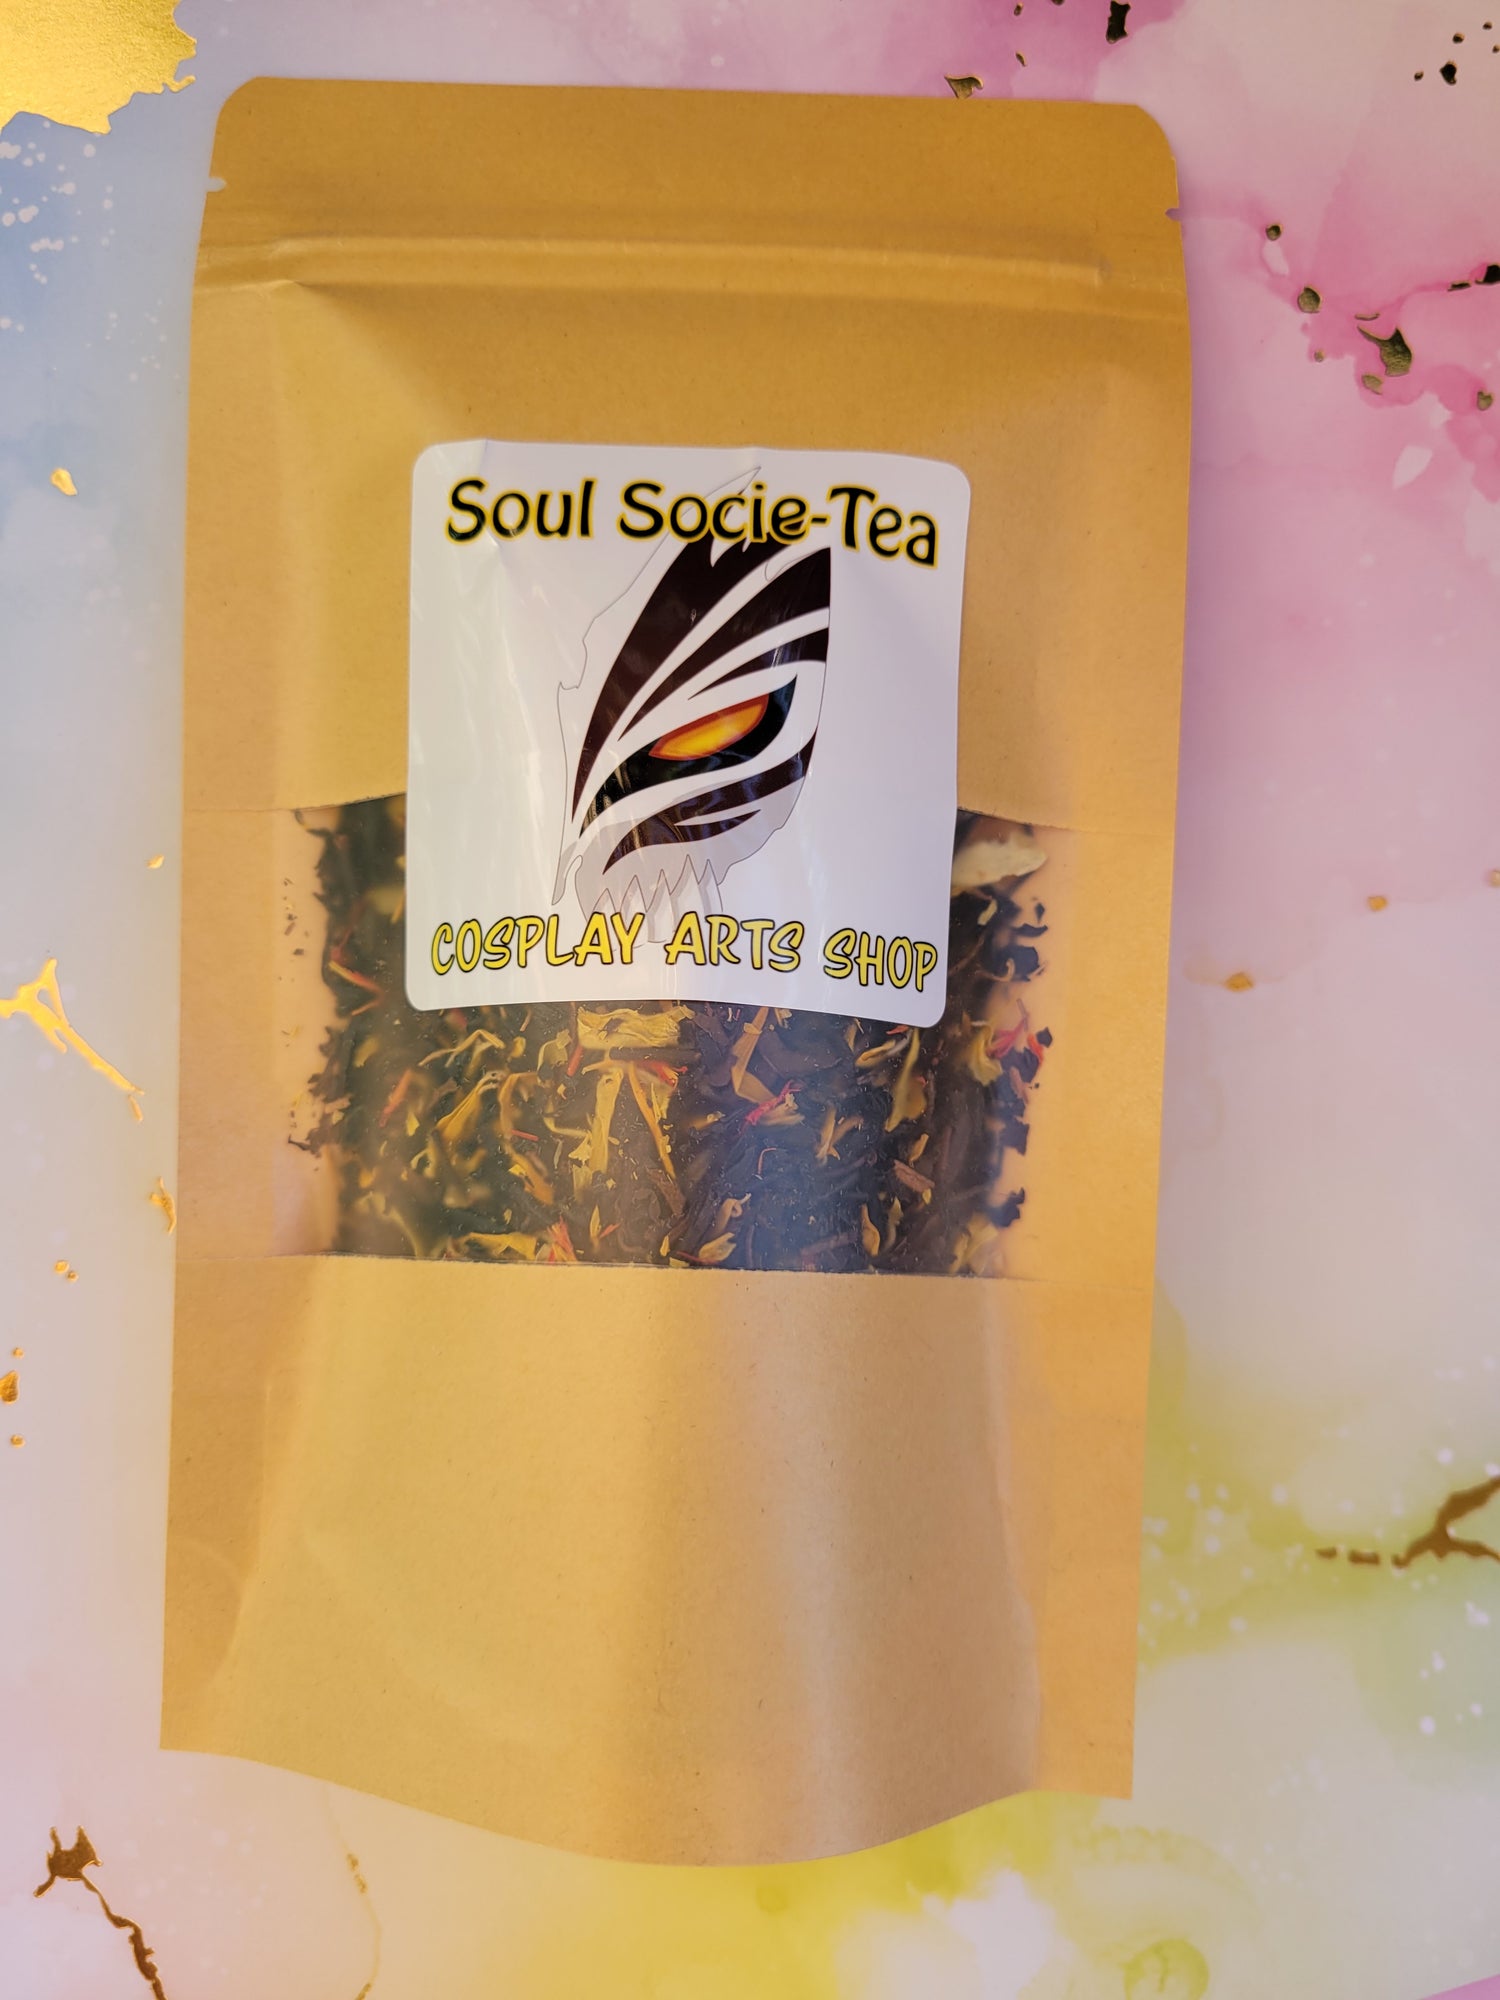 Soul Soci-Tea - Cosplay Arts Shop